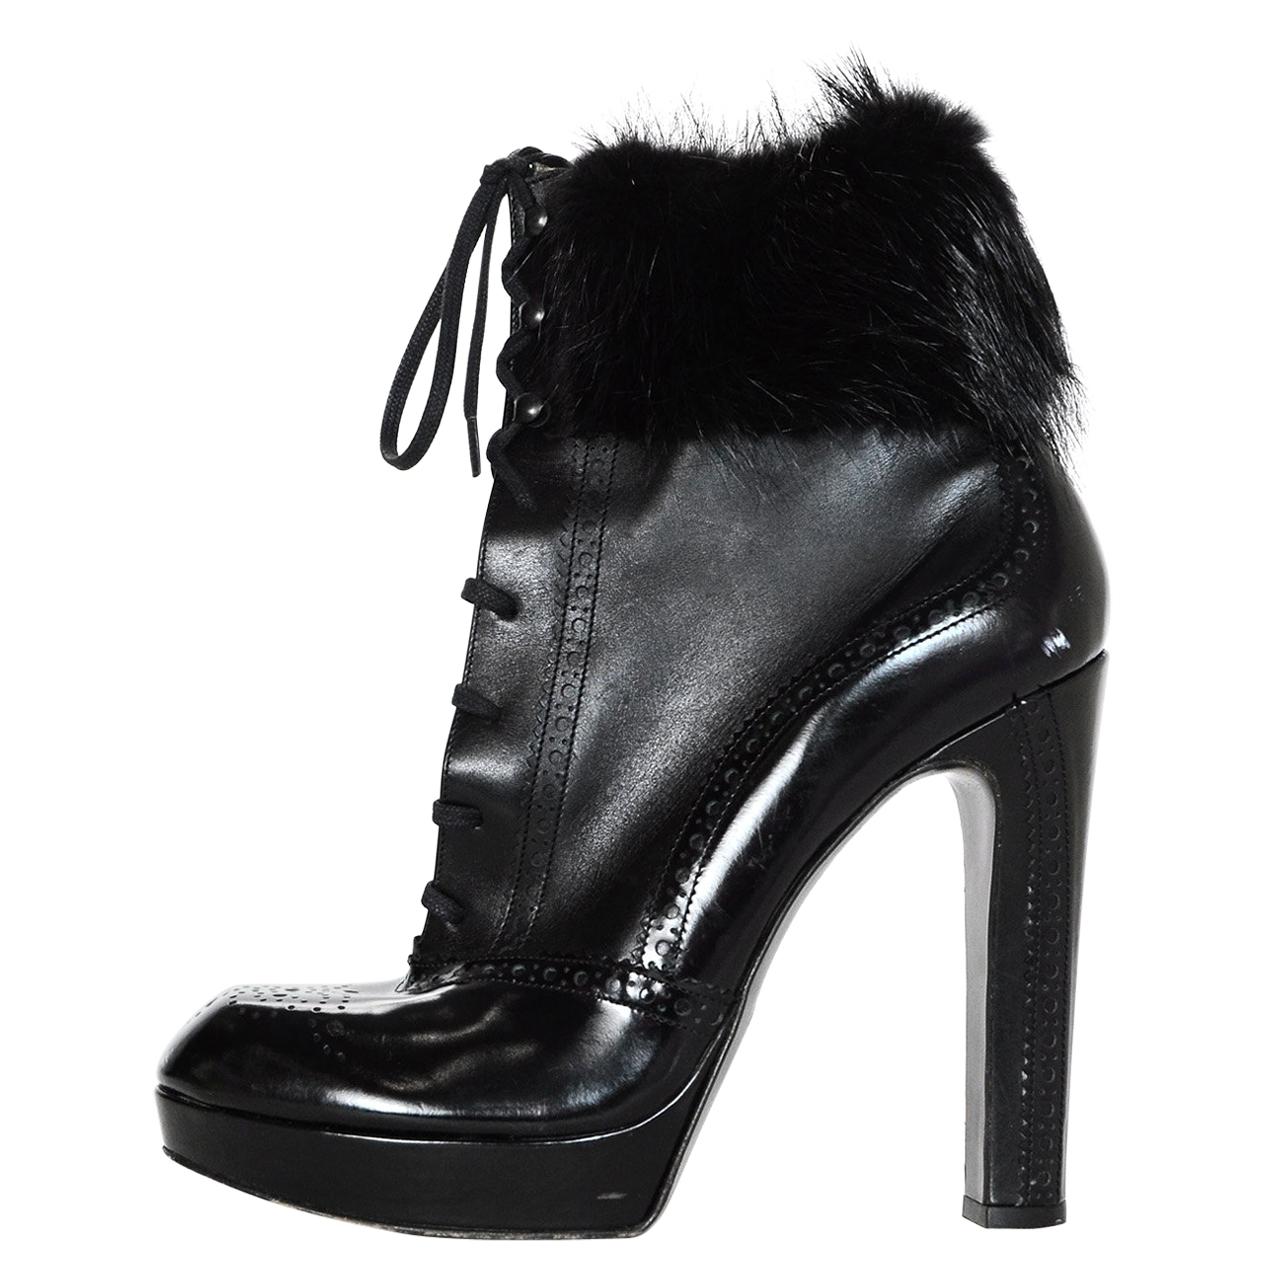 Robert Clergerie Black Patent Leather Short Boot W/ Fur Trim Sz 9.5 